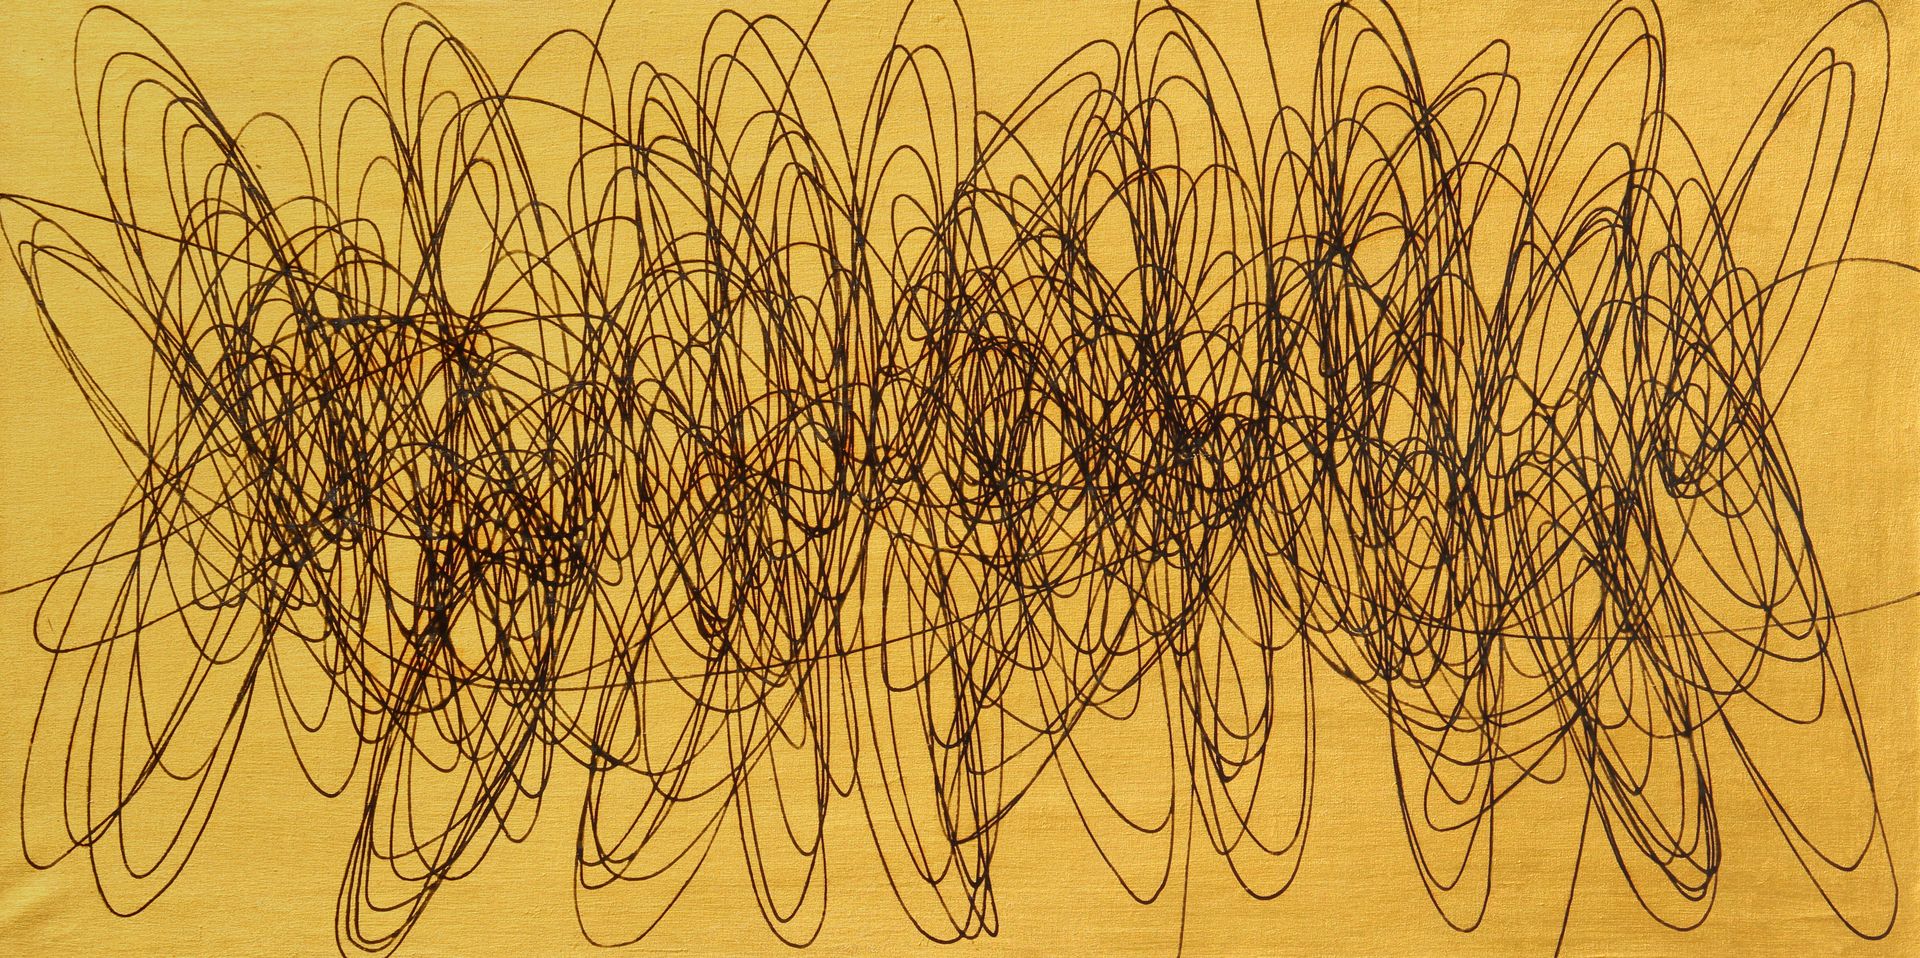 Roberto CRIPPA Spirale 1951, oil on canvas, cm. 60x120

Certificate by Roberto C&hellip;